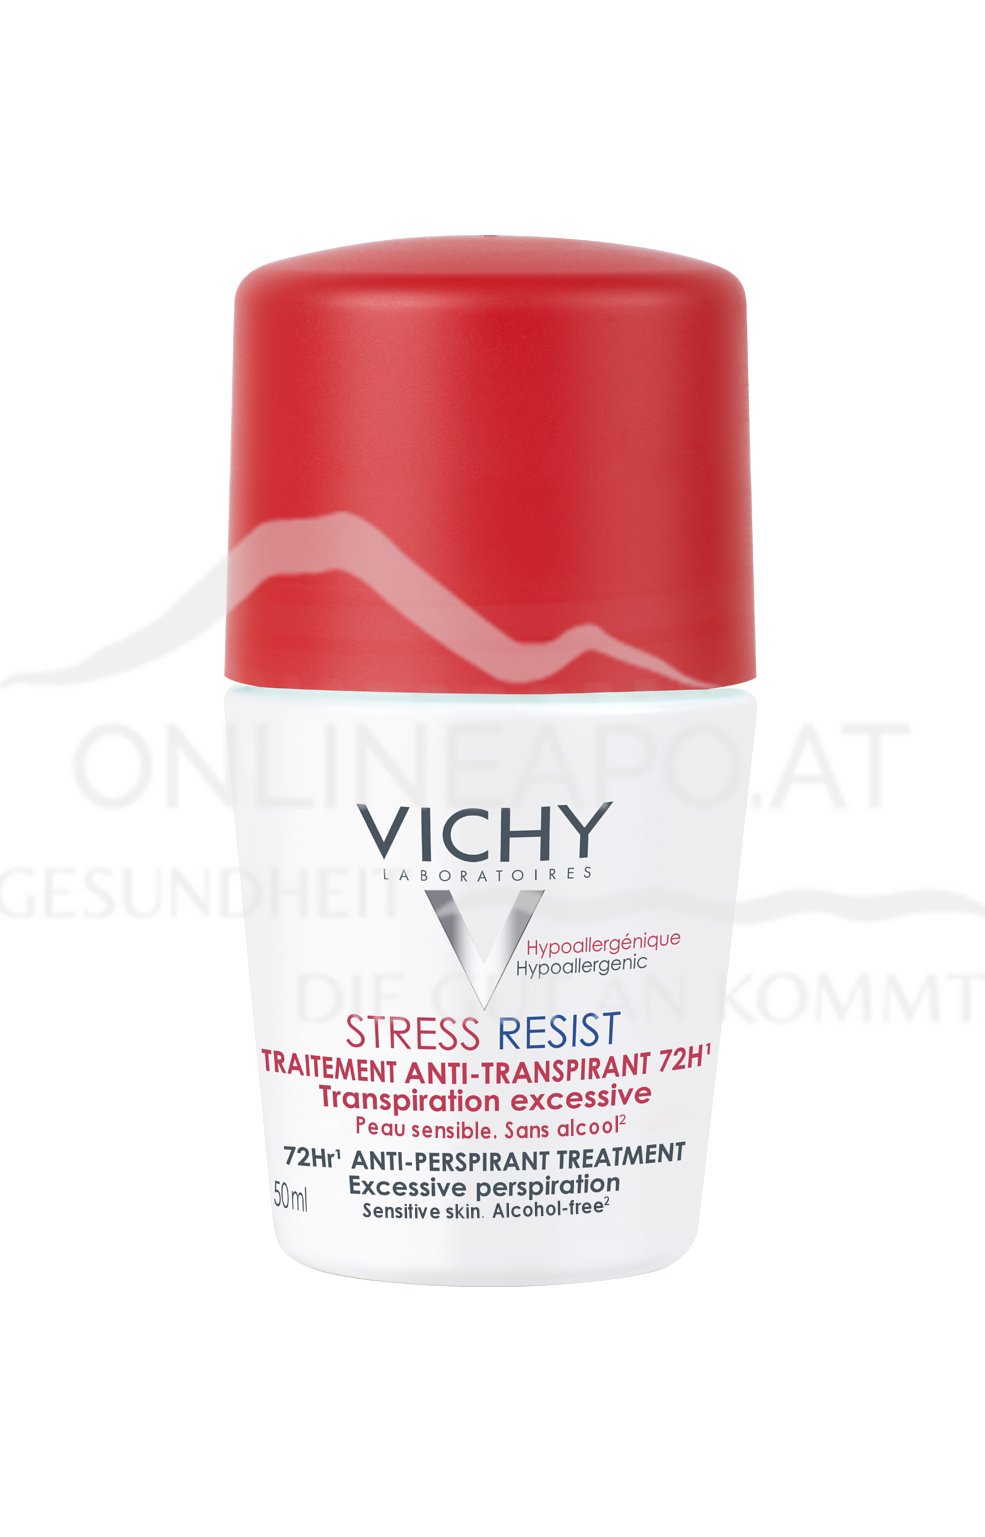 VICHY Deo Anti-Transpirant 72h Stress Resist